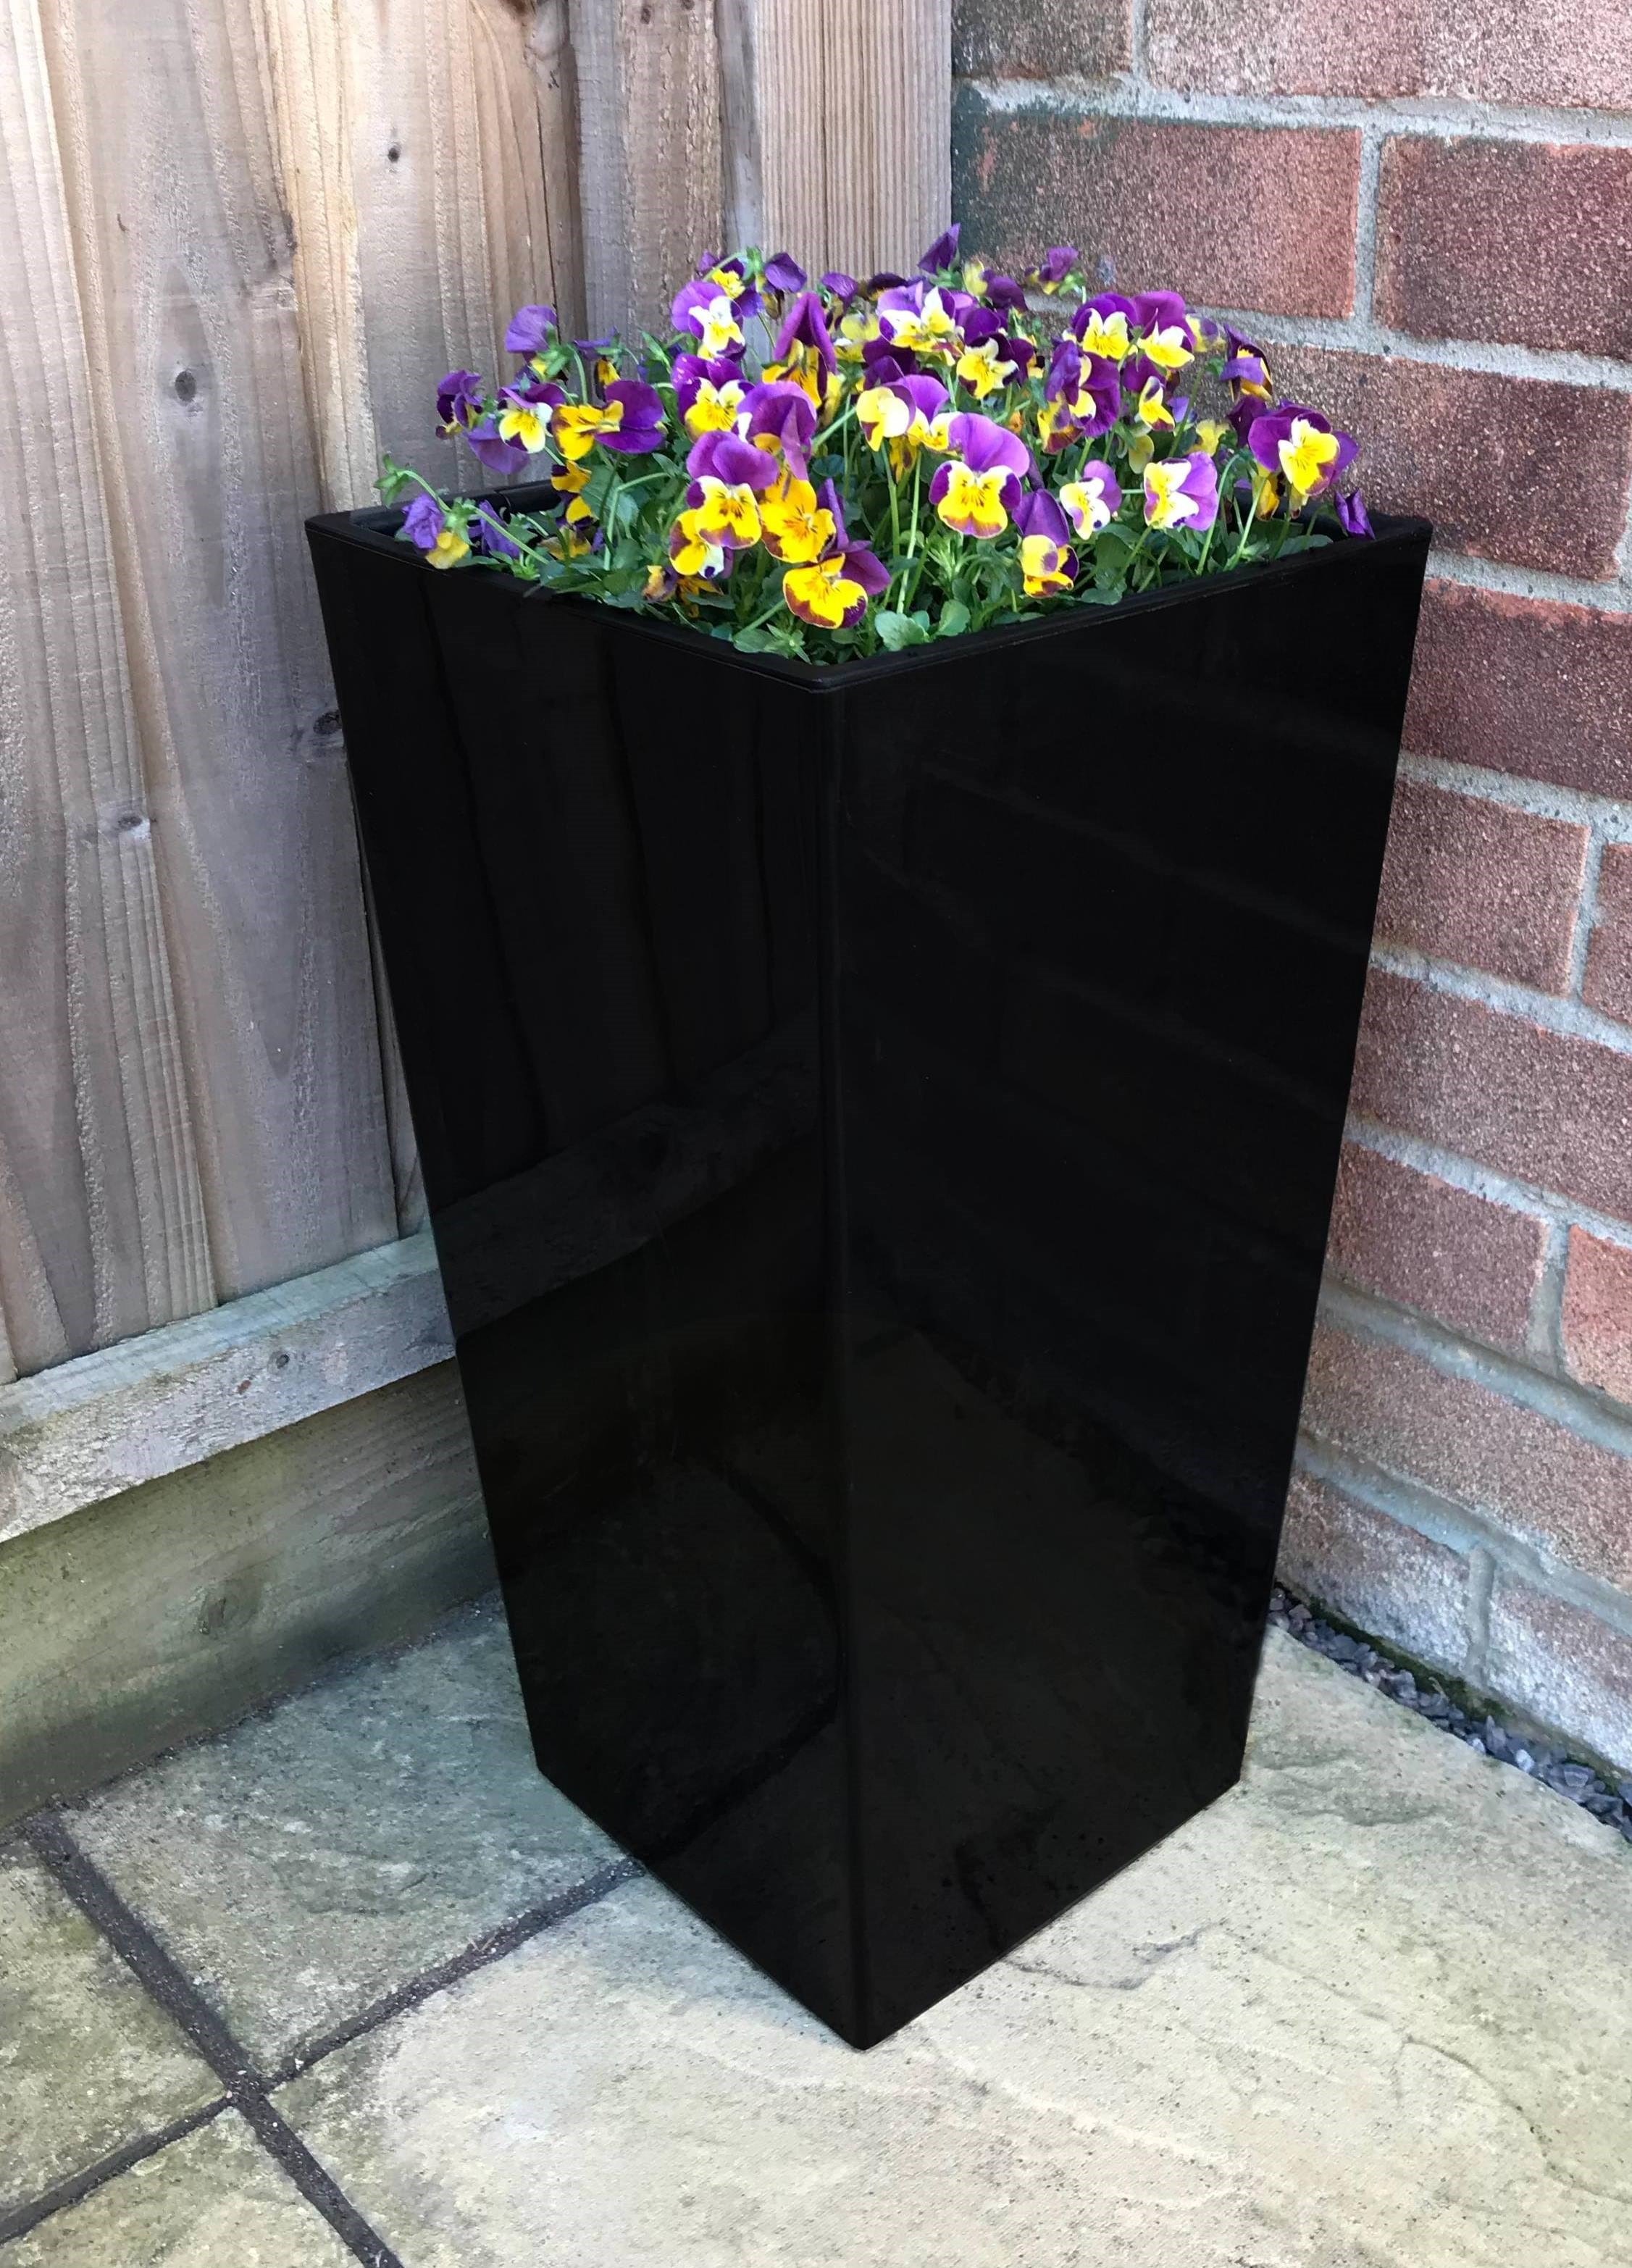 90cm x 40cm Gloss Tall Flared Square Fibreglass Planter in Black - by Primrose™